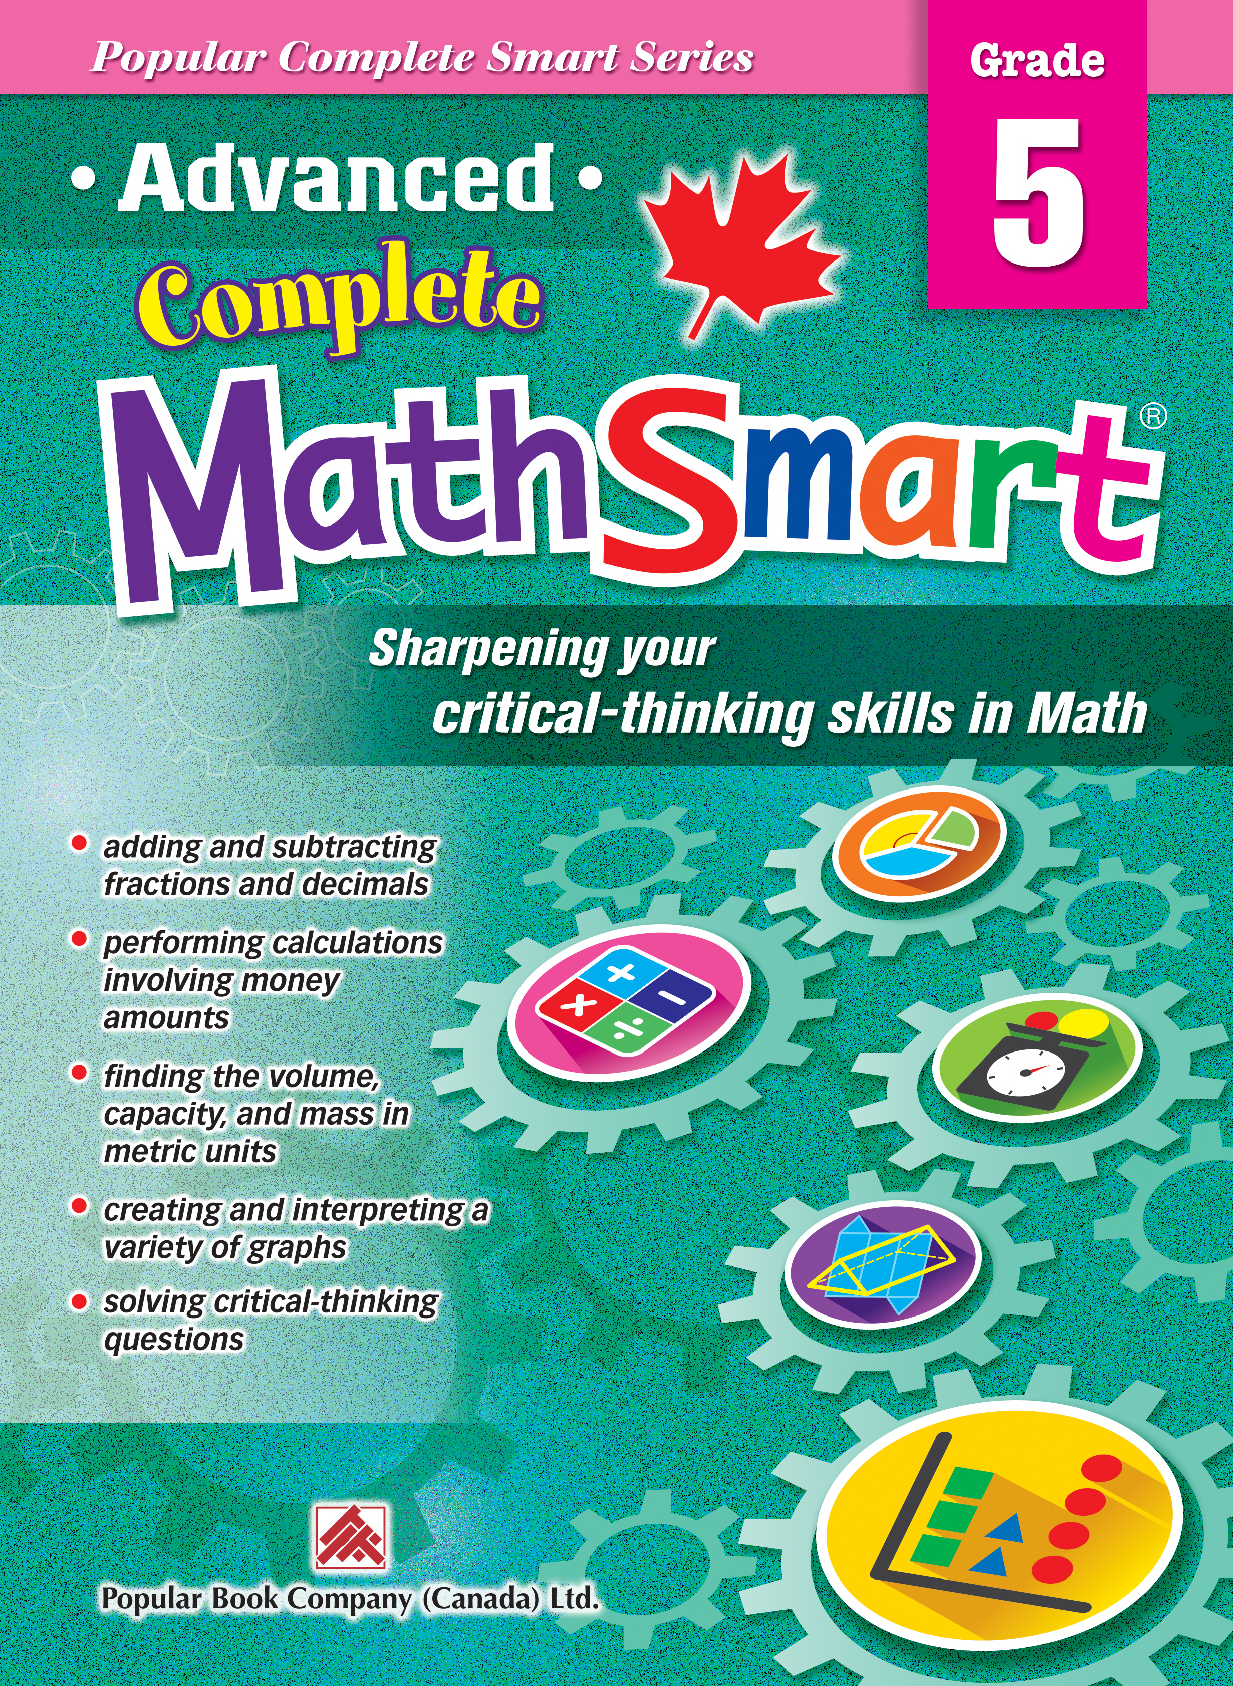 Advanced Complete MathSmart Grade 5